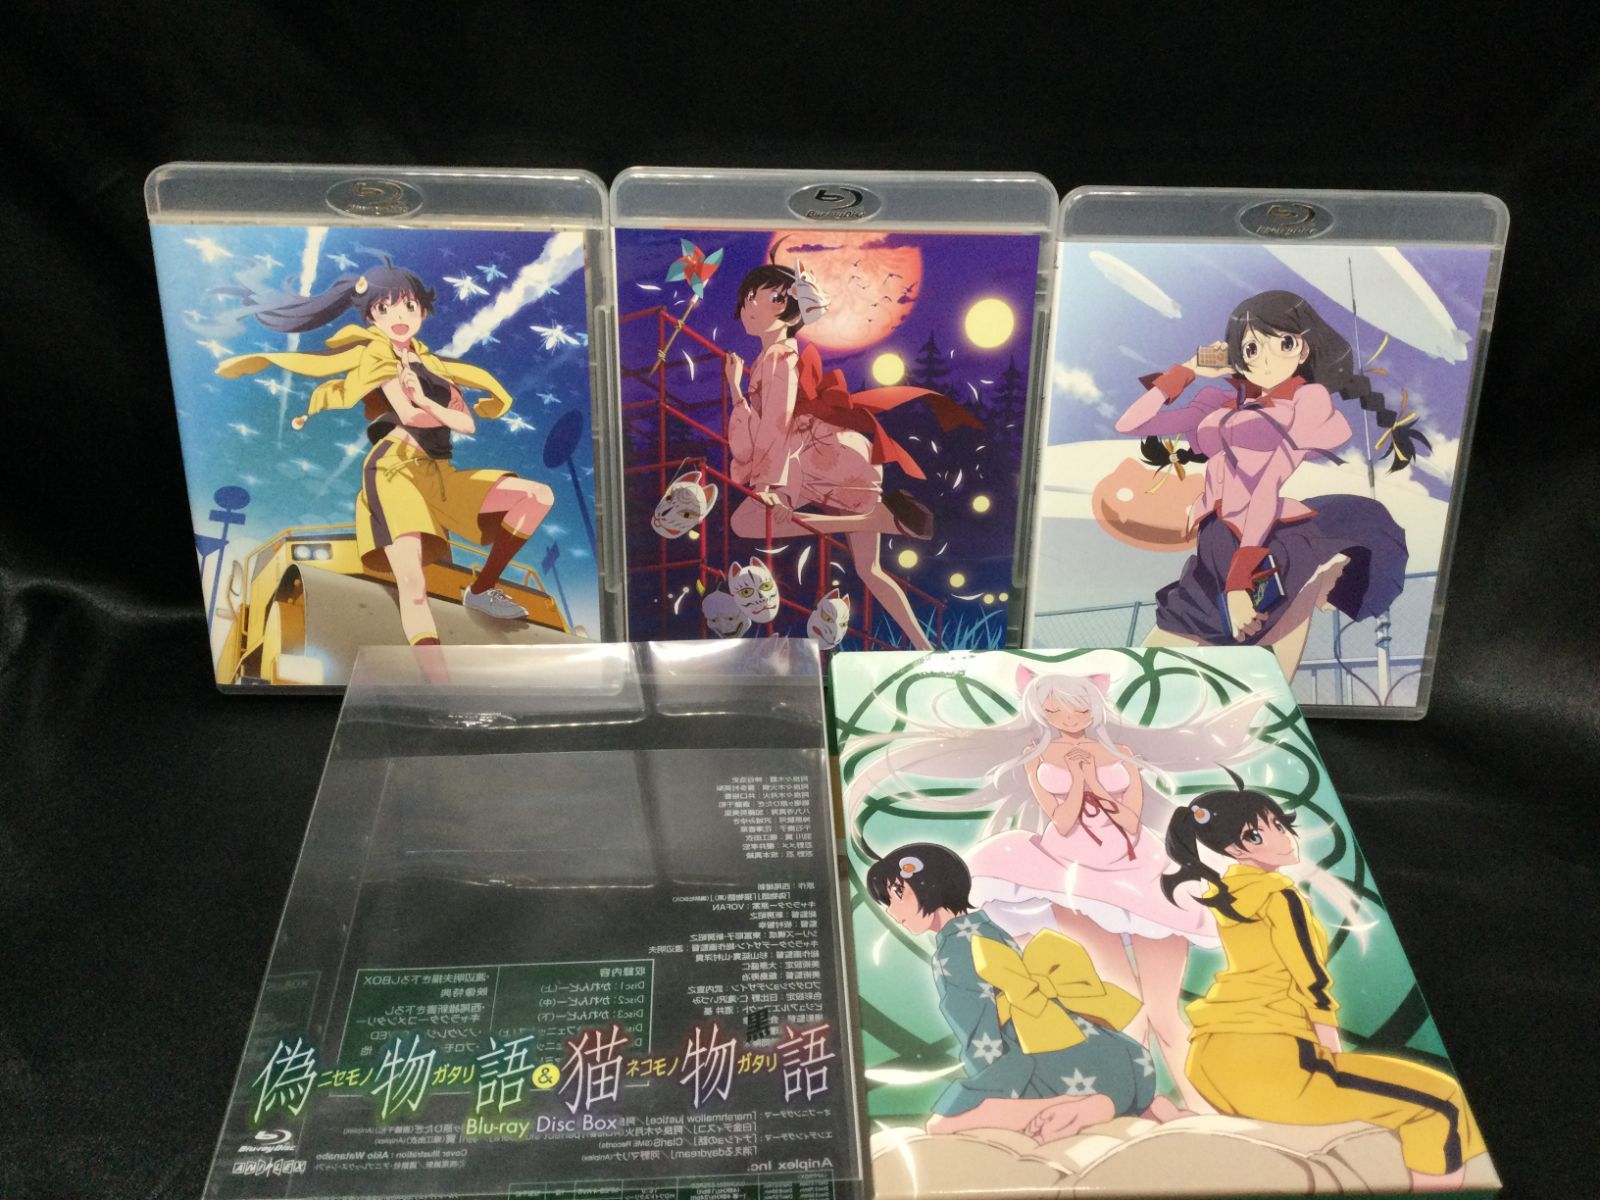 ☆ 偽物語&猫物語(黒) Blu-ray Disc Box【完全生産限定版】 - メルカリ